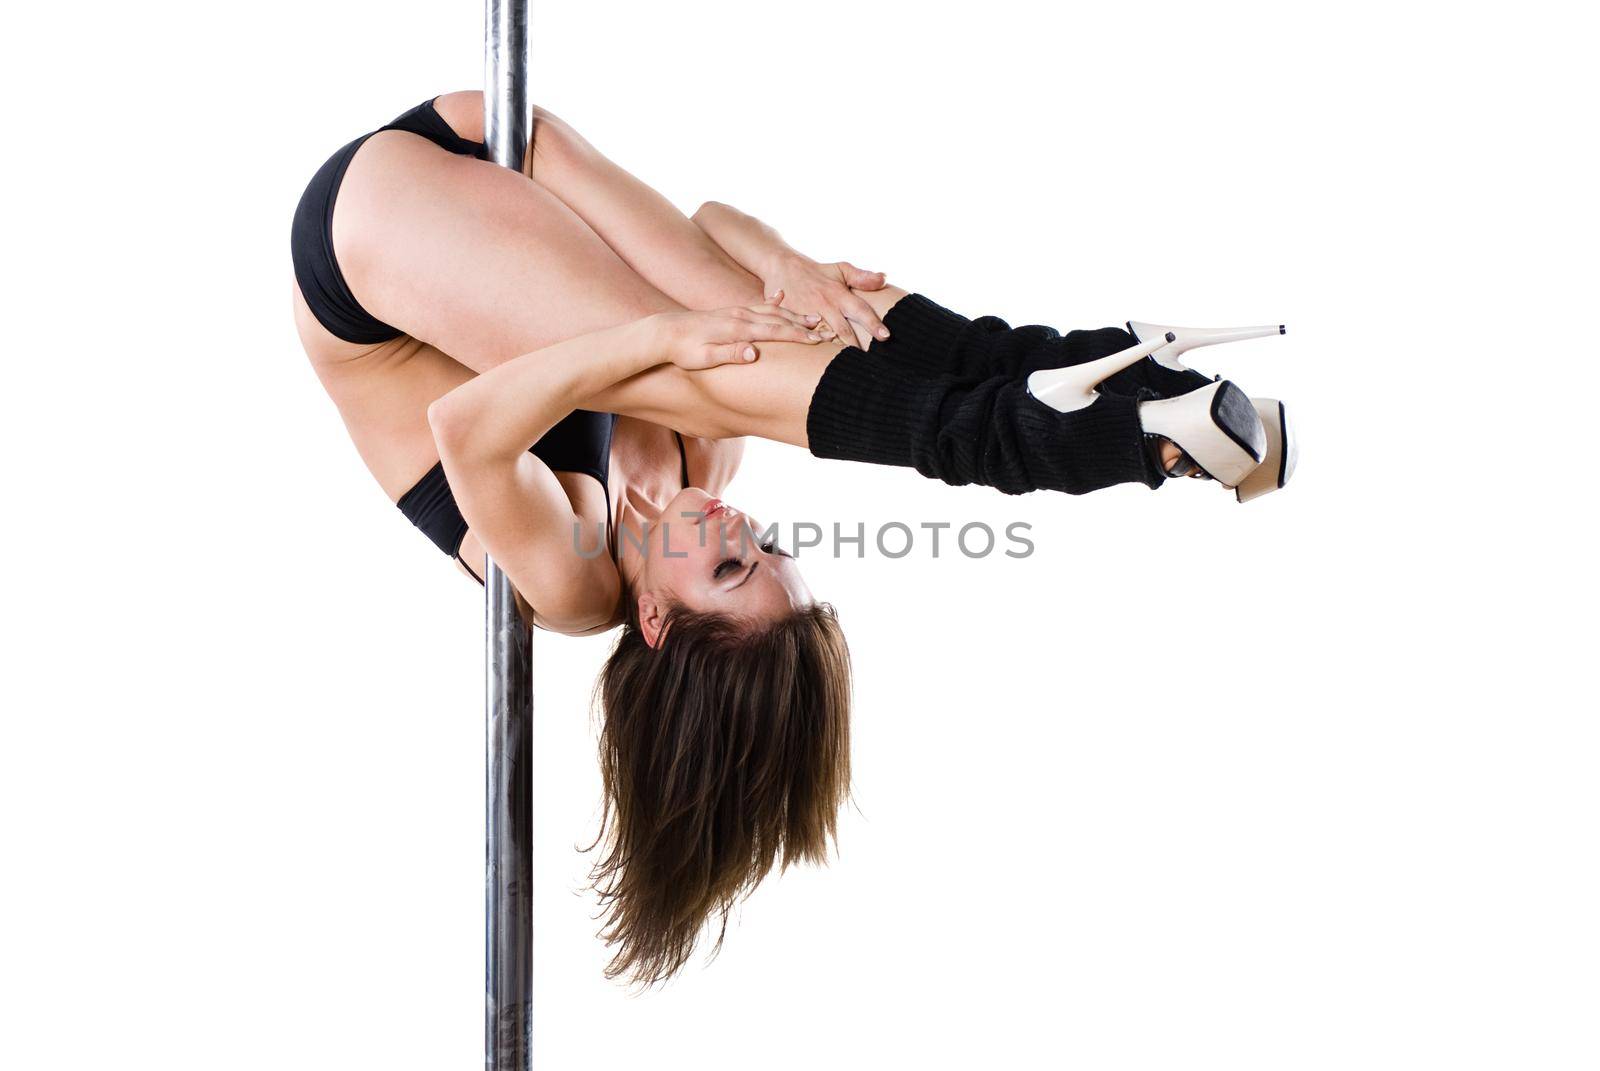 Young sexy pole dance woman by Julenochek